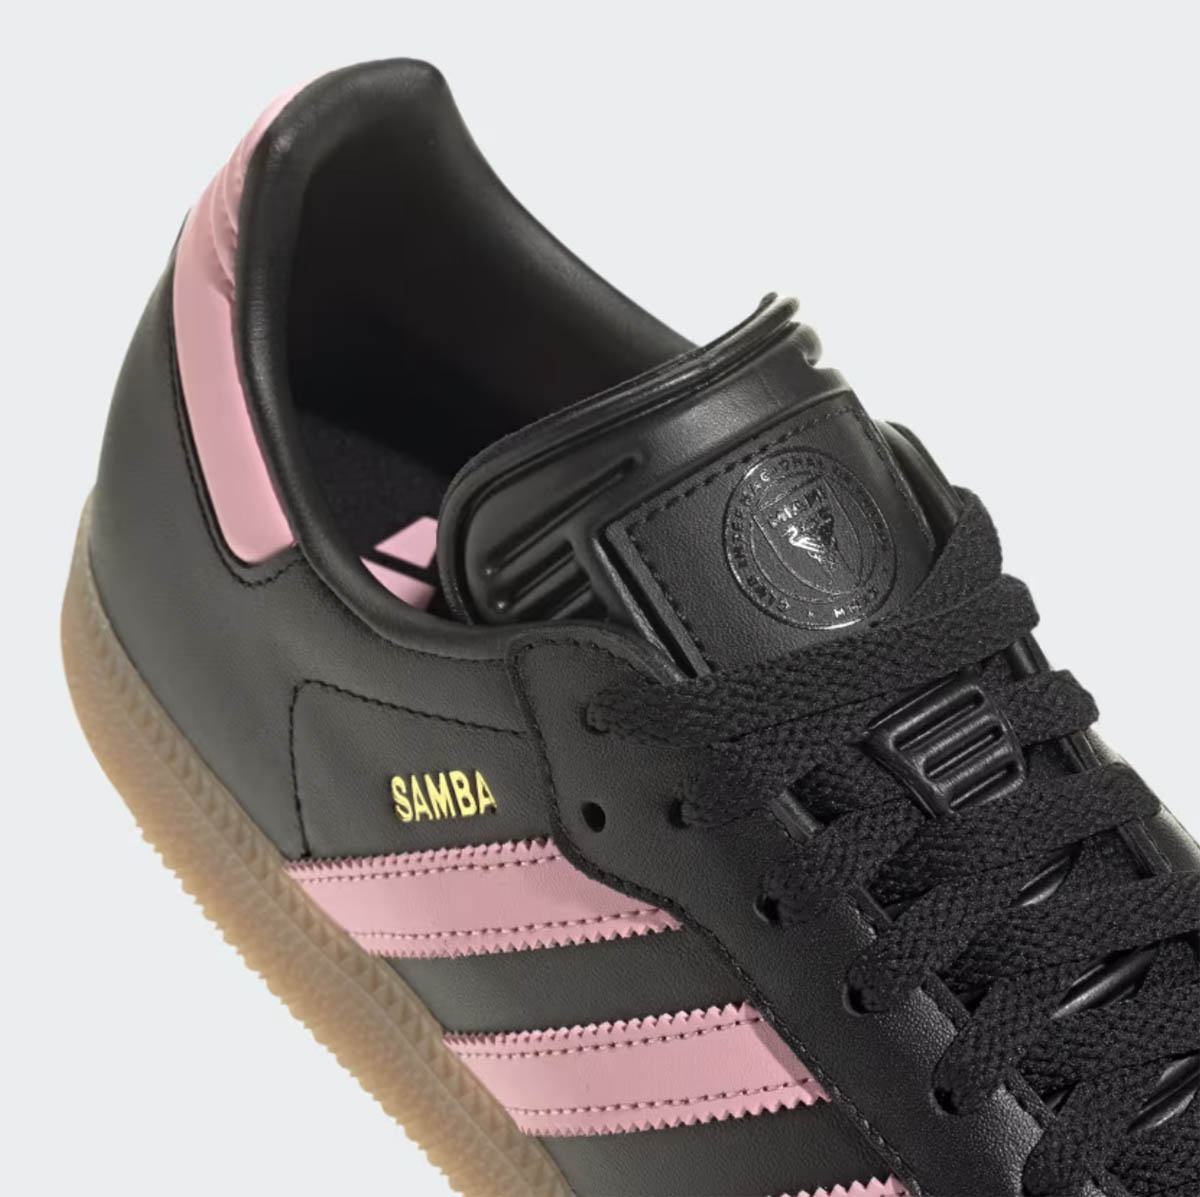 Adidas-Samba-Messi-Inter-Miami-Shoes-Black-Pink-4